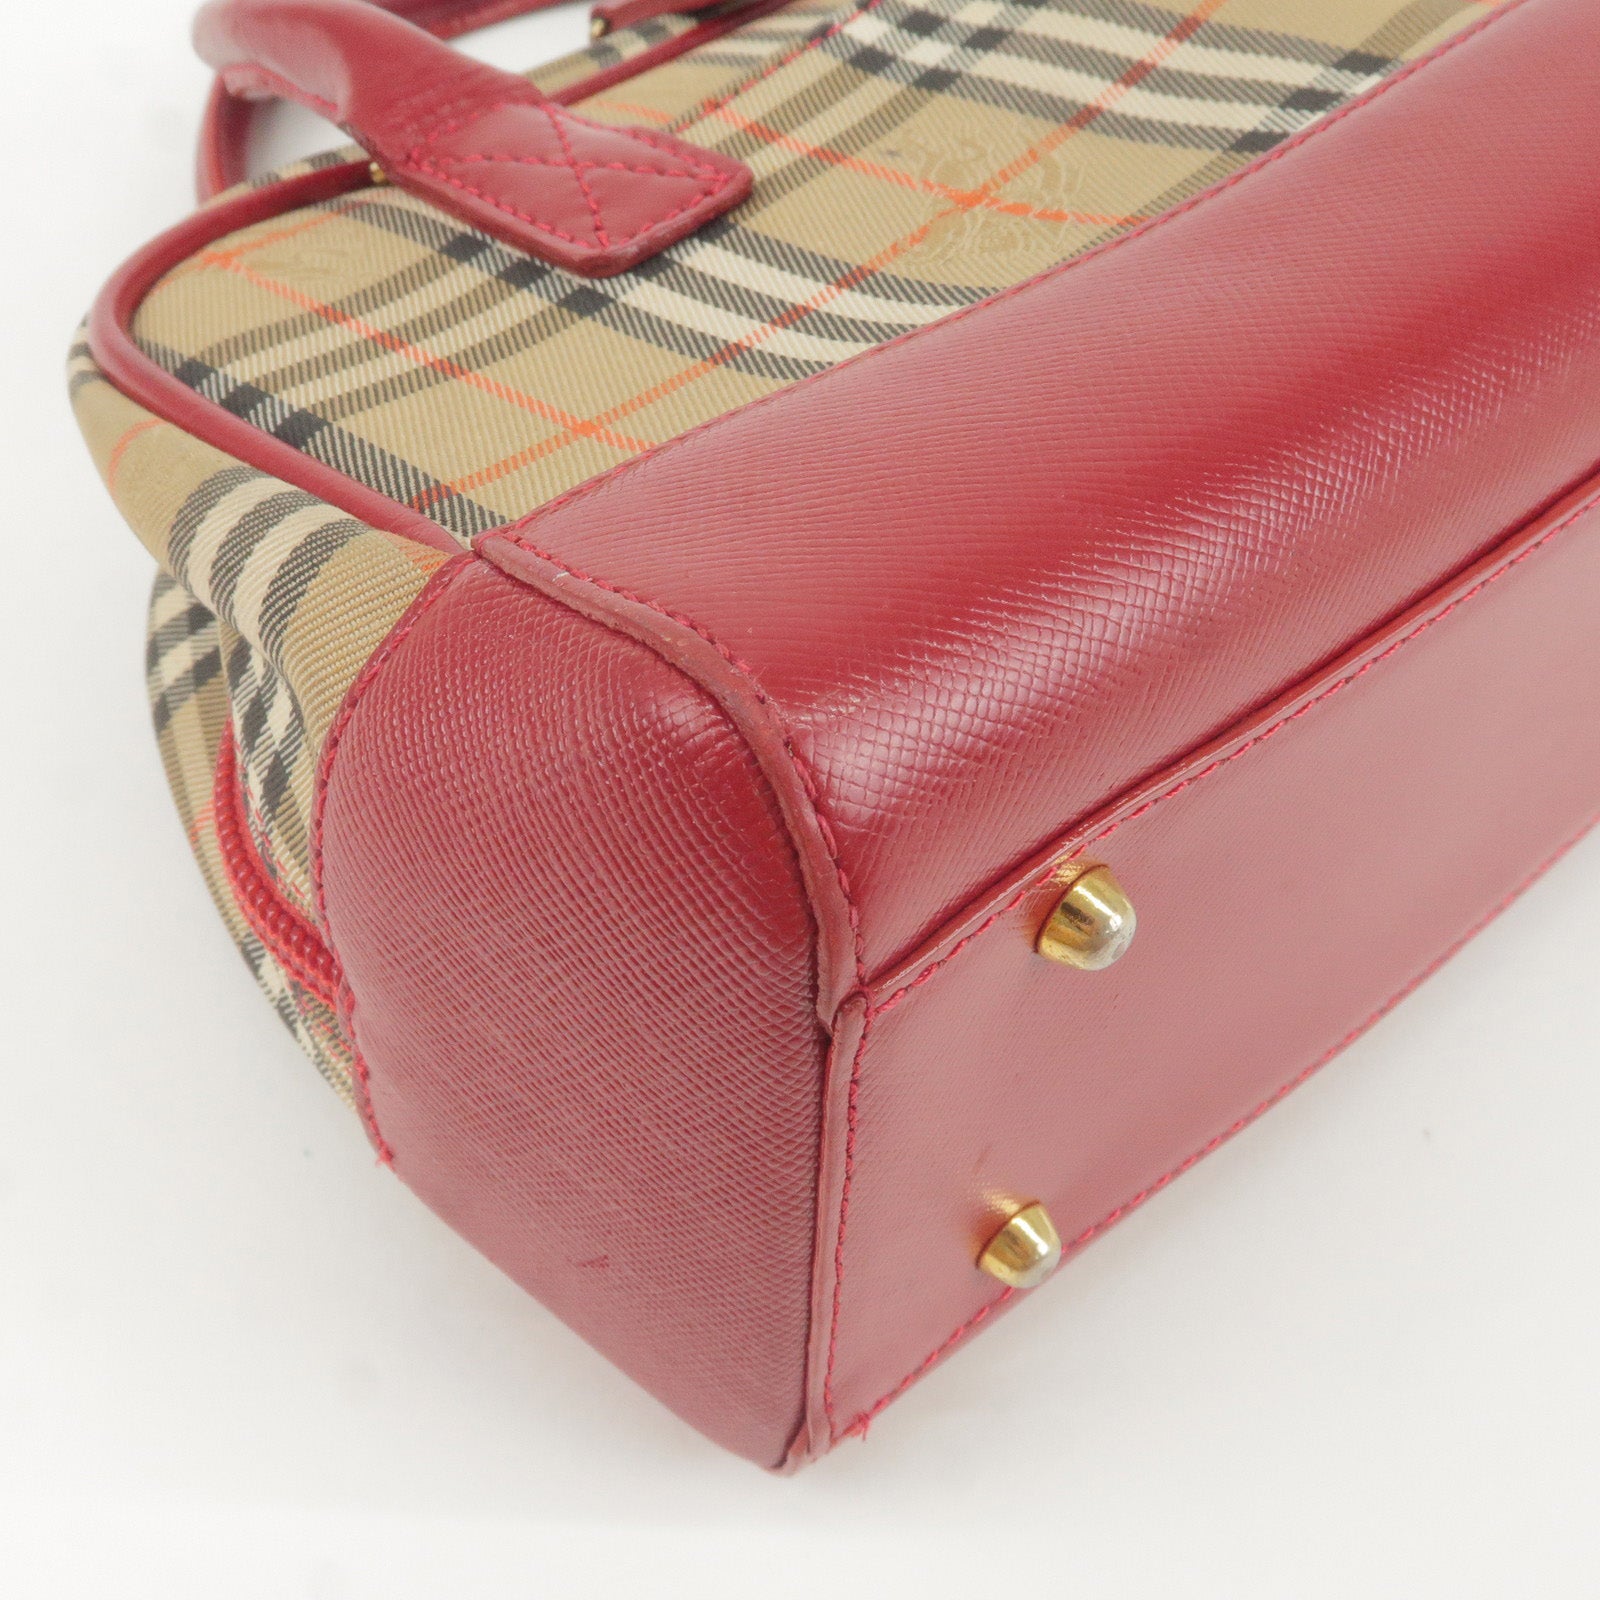 ✨ Authentic ✨BURBERRY Purse | Burberry purse, Burberry london, Burberry bag